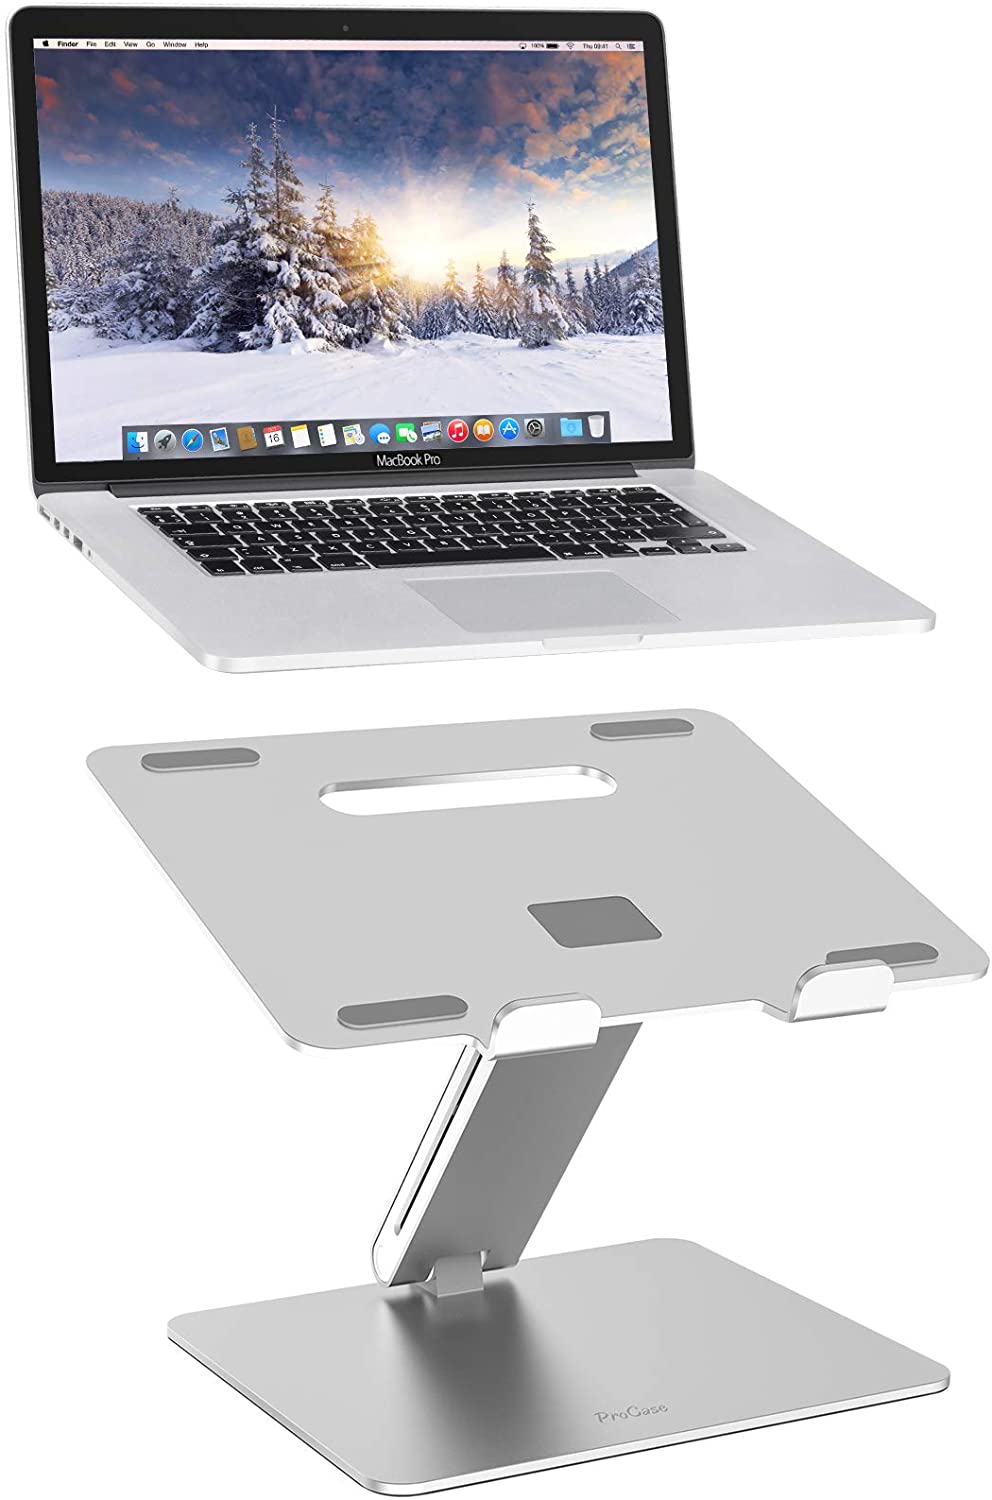 ProCase Soporte ergonómico de aluminio para laptop, soporte elevador portátil para computadora portátil MacBook Pro/Air Surface Dell Lenovo portátiles de hasta 15.6 plg, color plateado